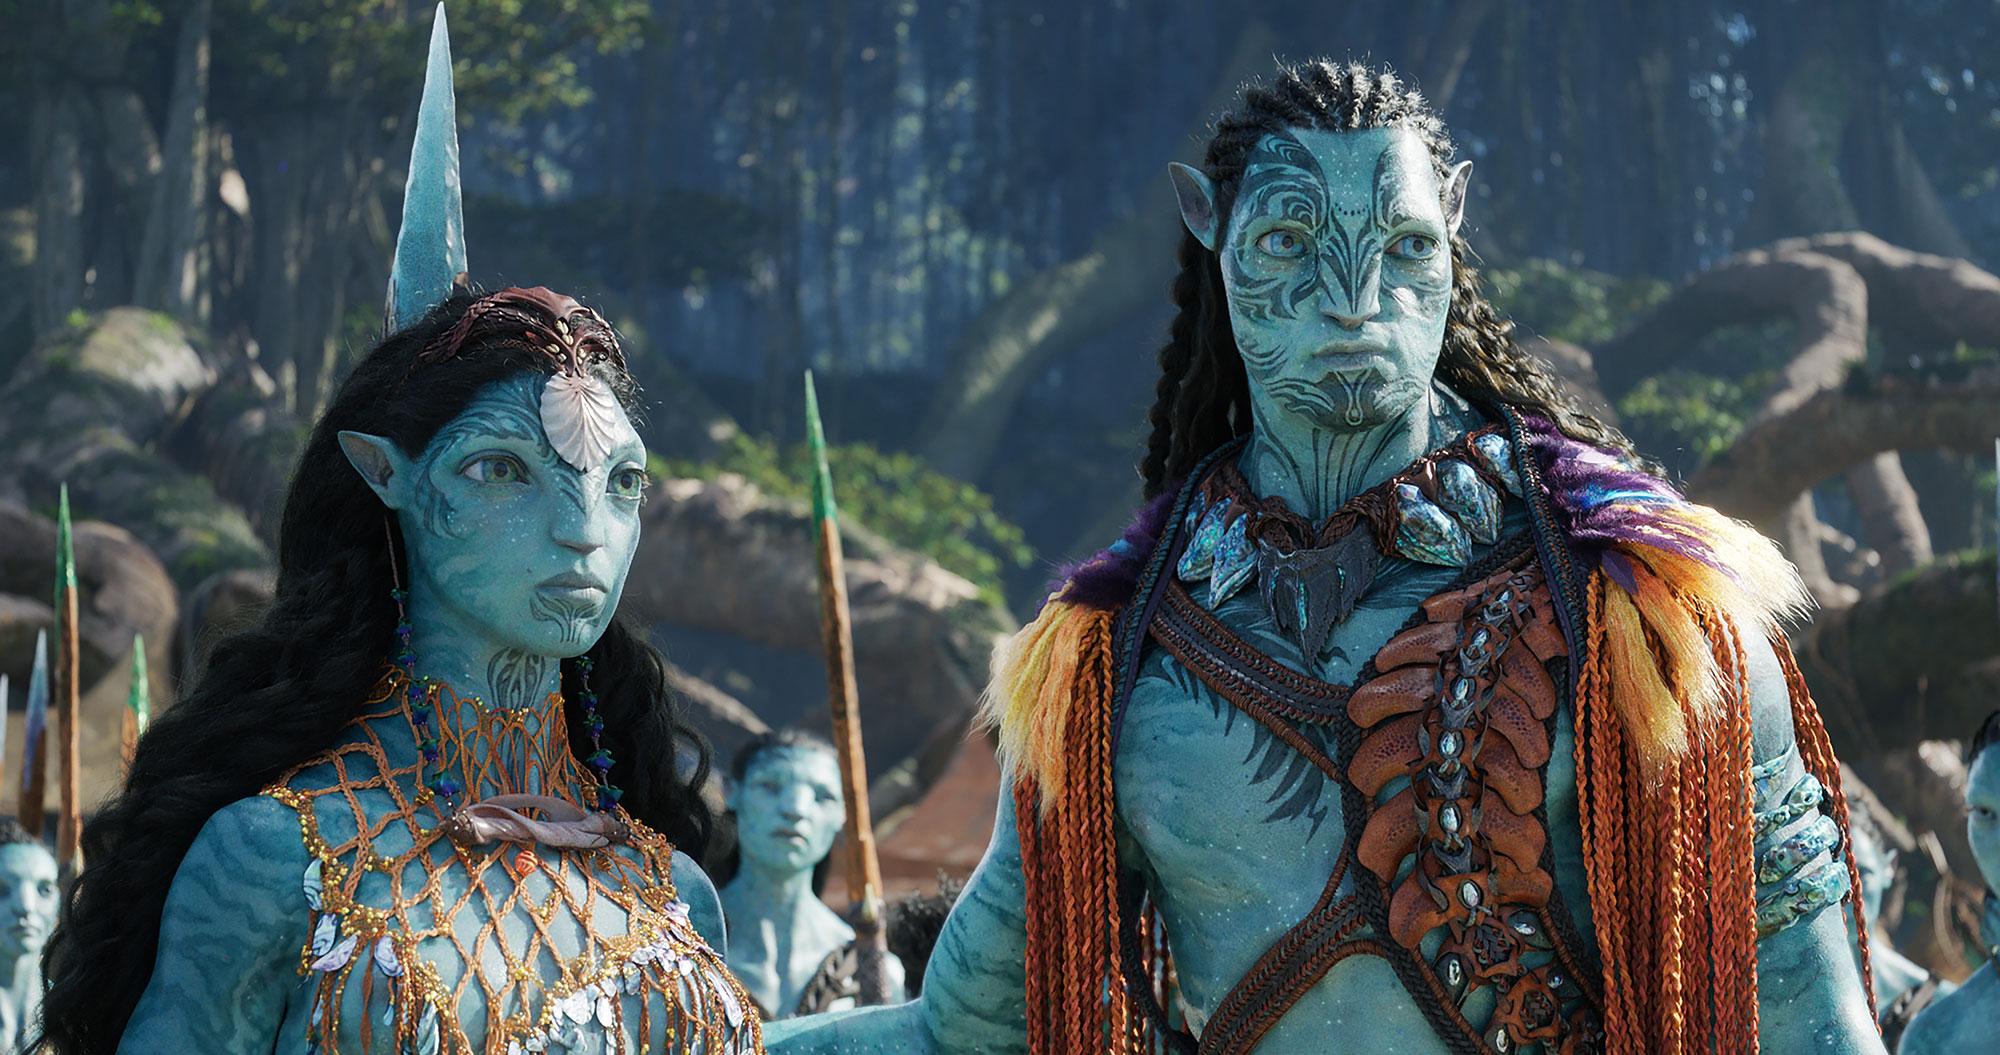 Avatar 5 Plot Brings Navi to Earth Neytiri Eyes Will Open to Earth   Variety